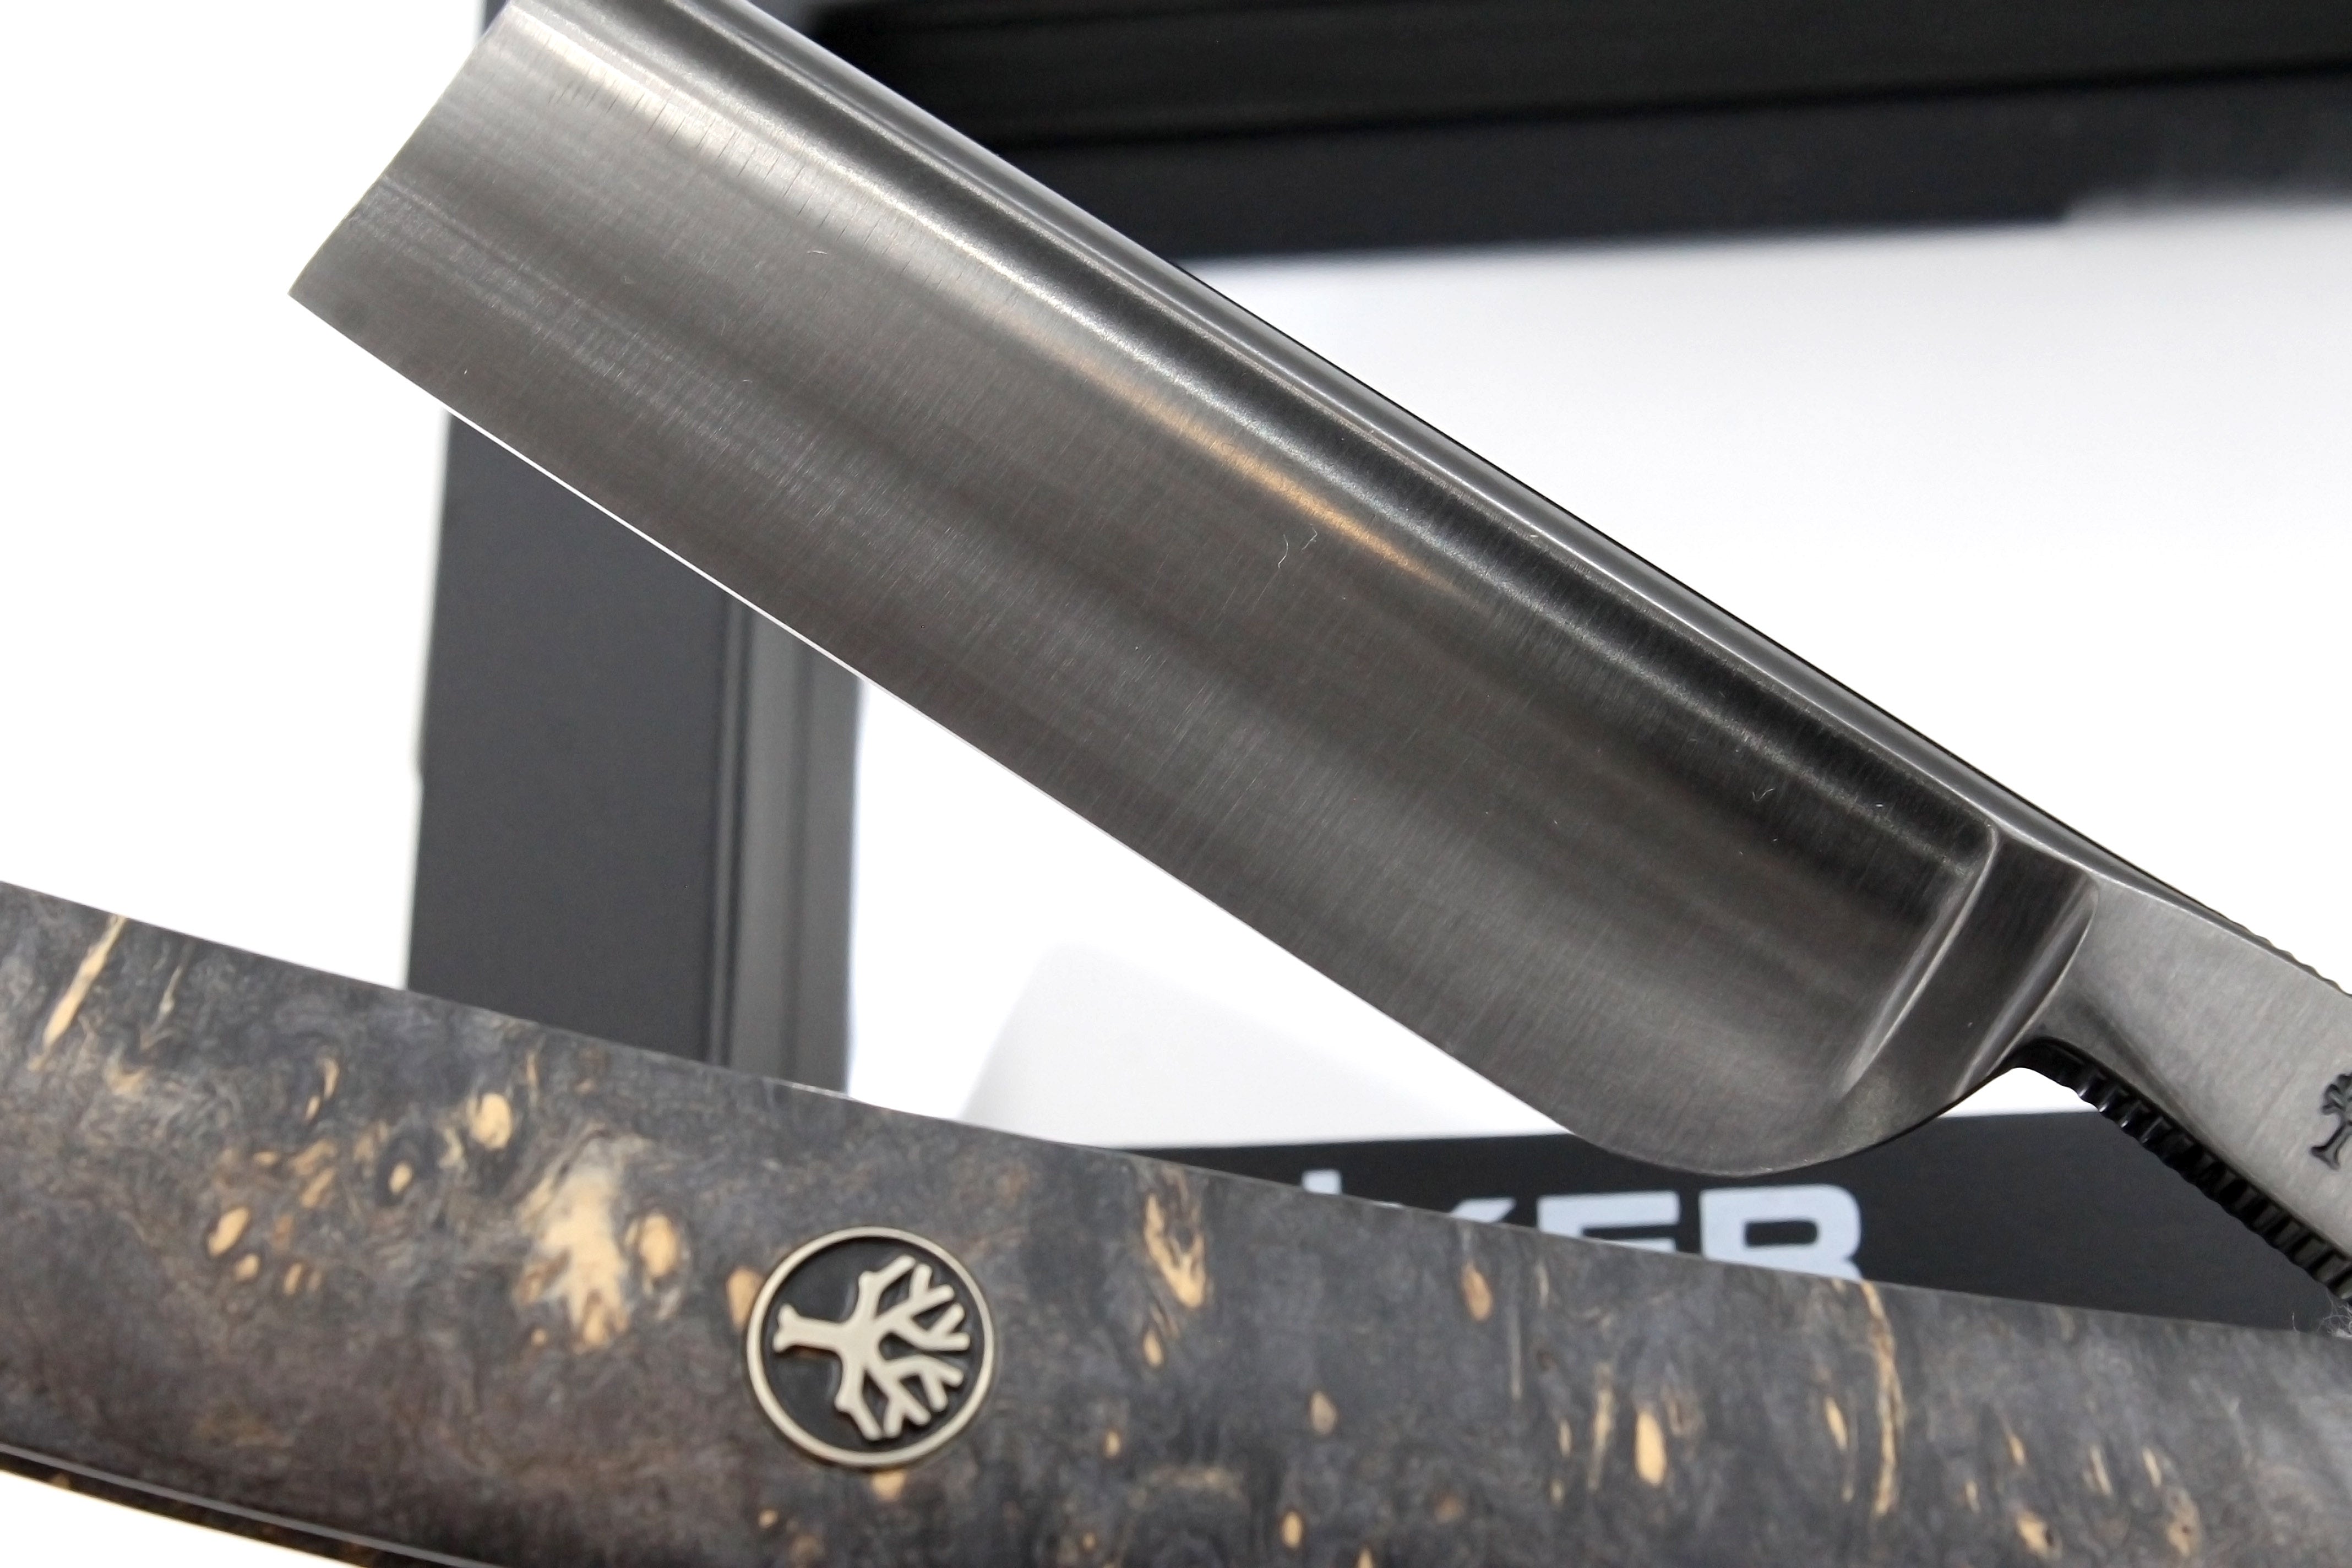 Boker Black Amboina 6/8 Blade with Burl Wood Scales Full Hollow Solingen Straight Razor